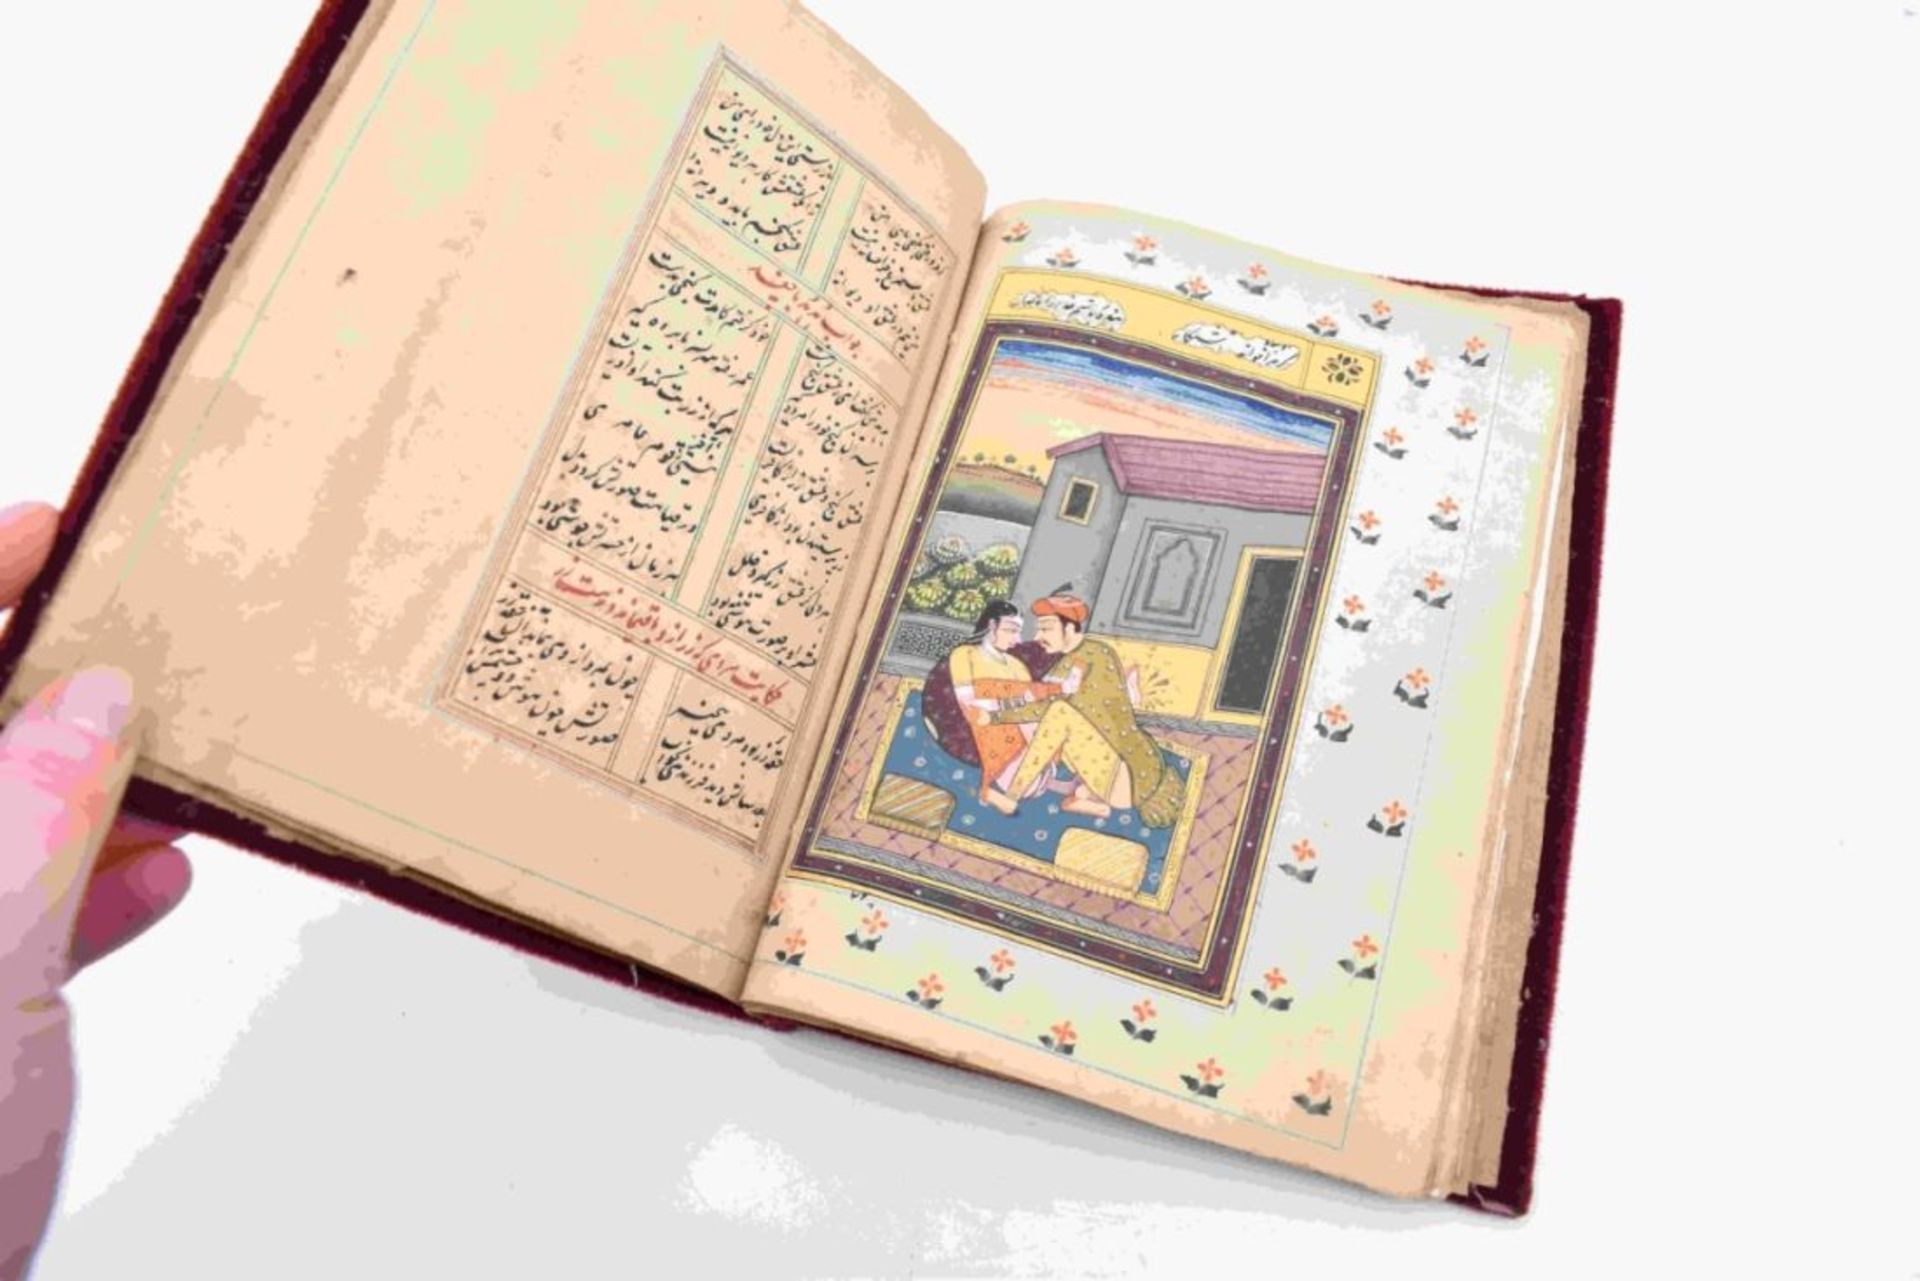 Persische Handschrift mit zehn indischen, erotischen Miniaturen, Wohl um 1900 - Image 5 of 9